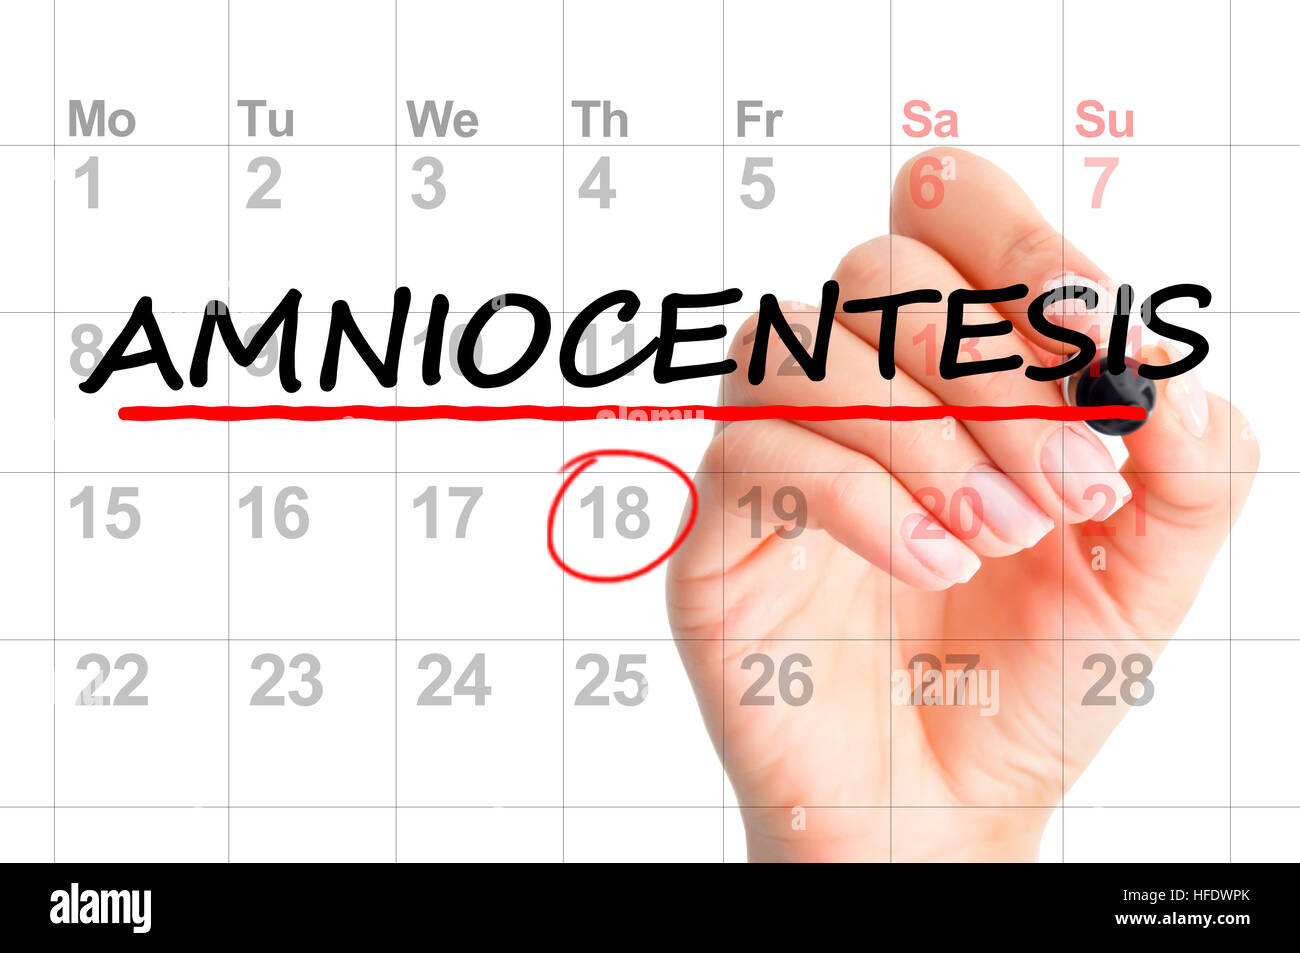 Amniocentesis schedule date on calendar Stock Photo